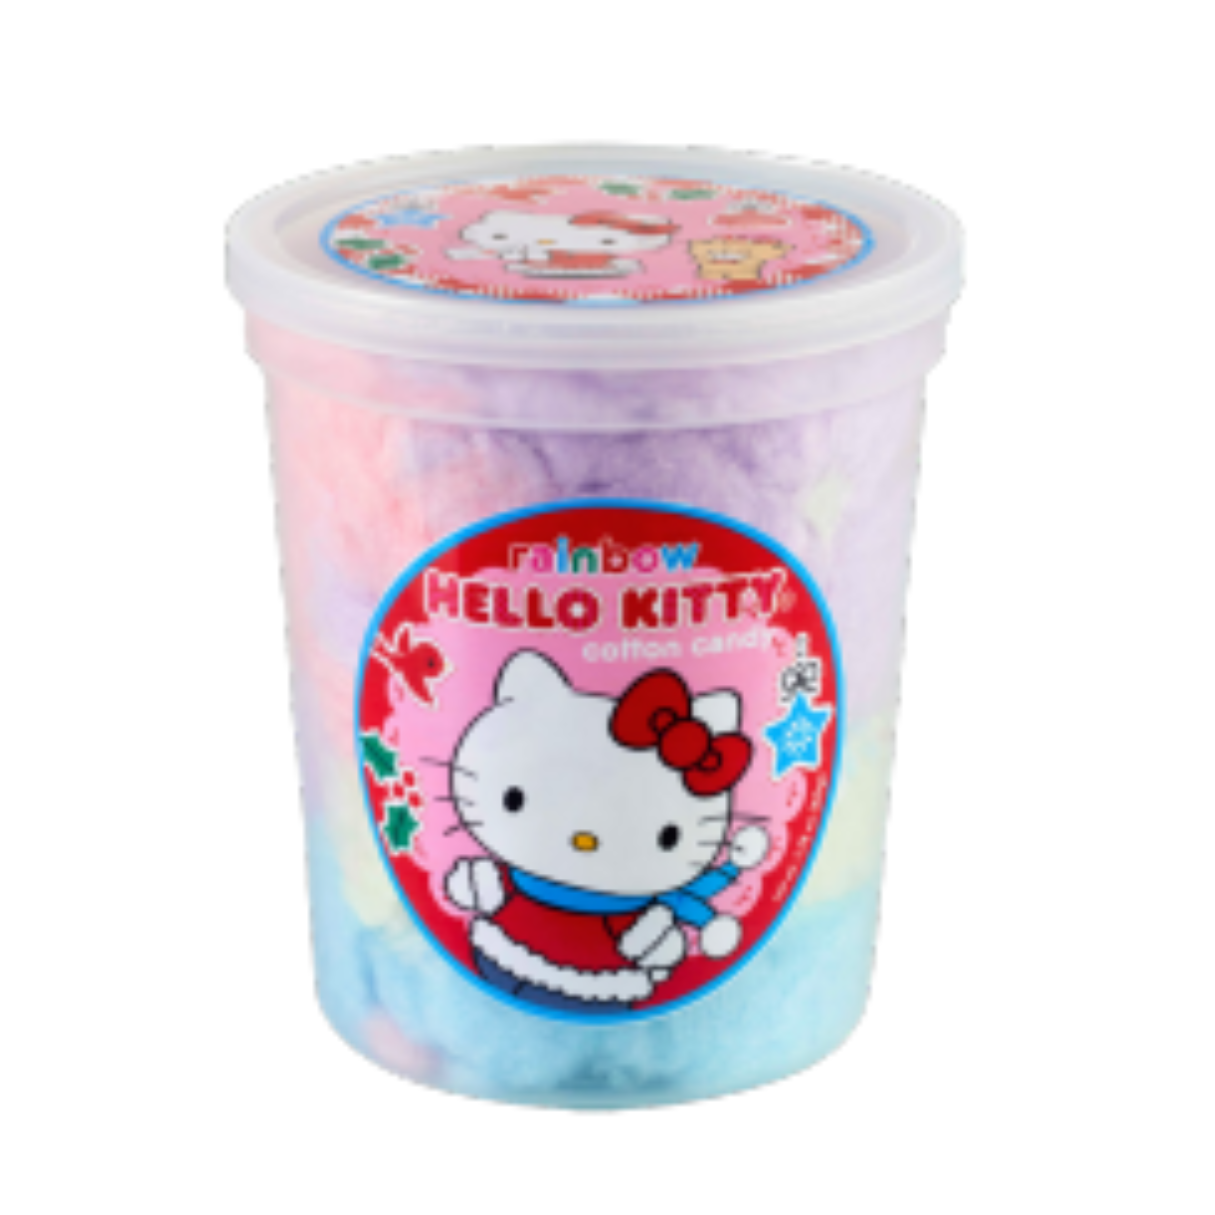 HK Holiday Rainbow Cotton Candy 1.75oz - 12ct